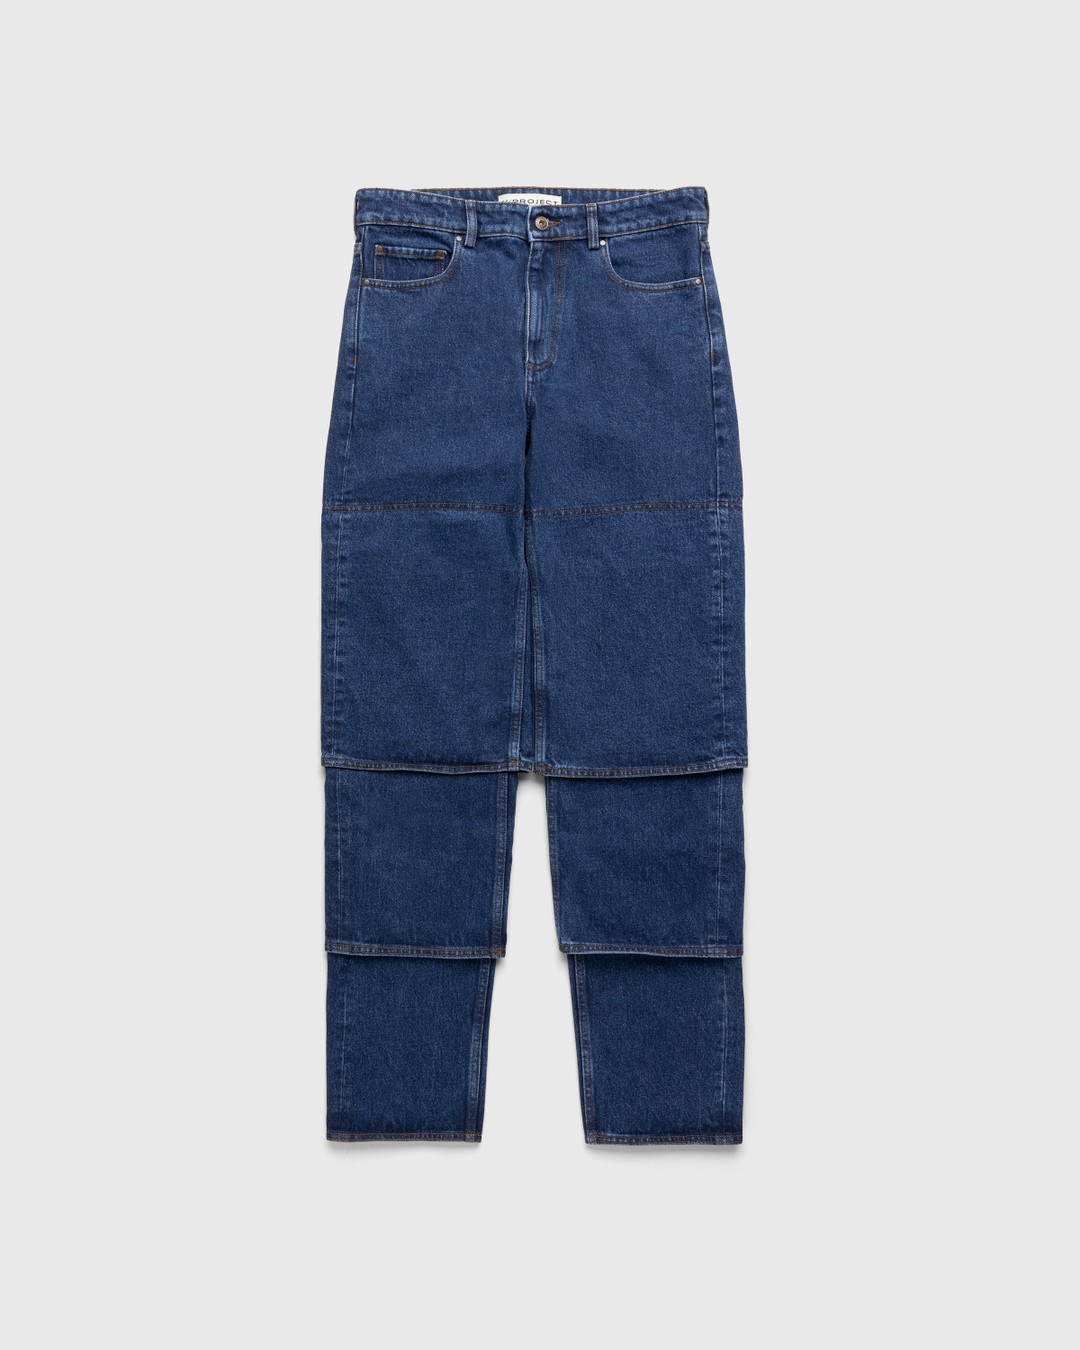 Y/Project – Classic Multi-Cuff Jeans Blue - Denim - Blue - Image 1